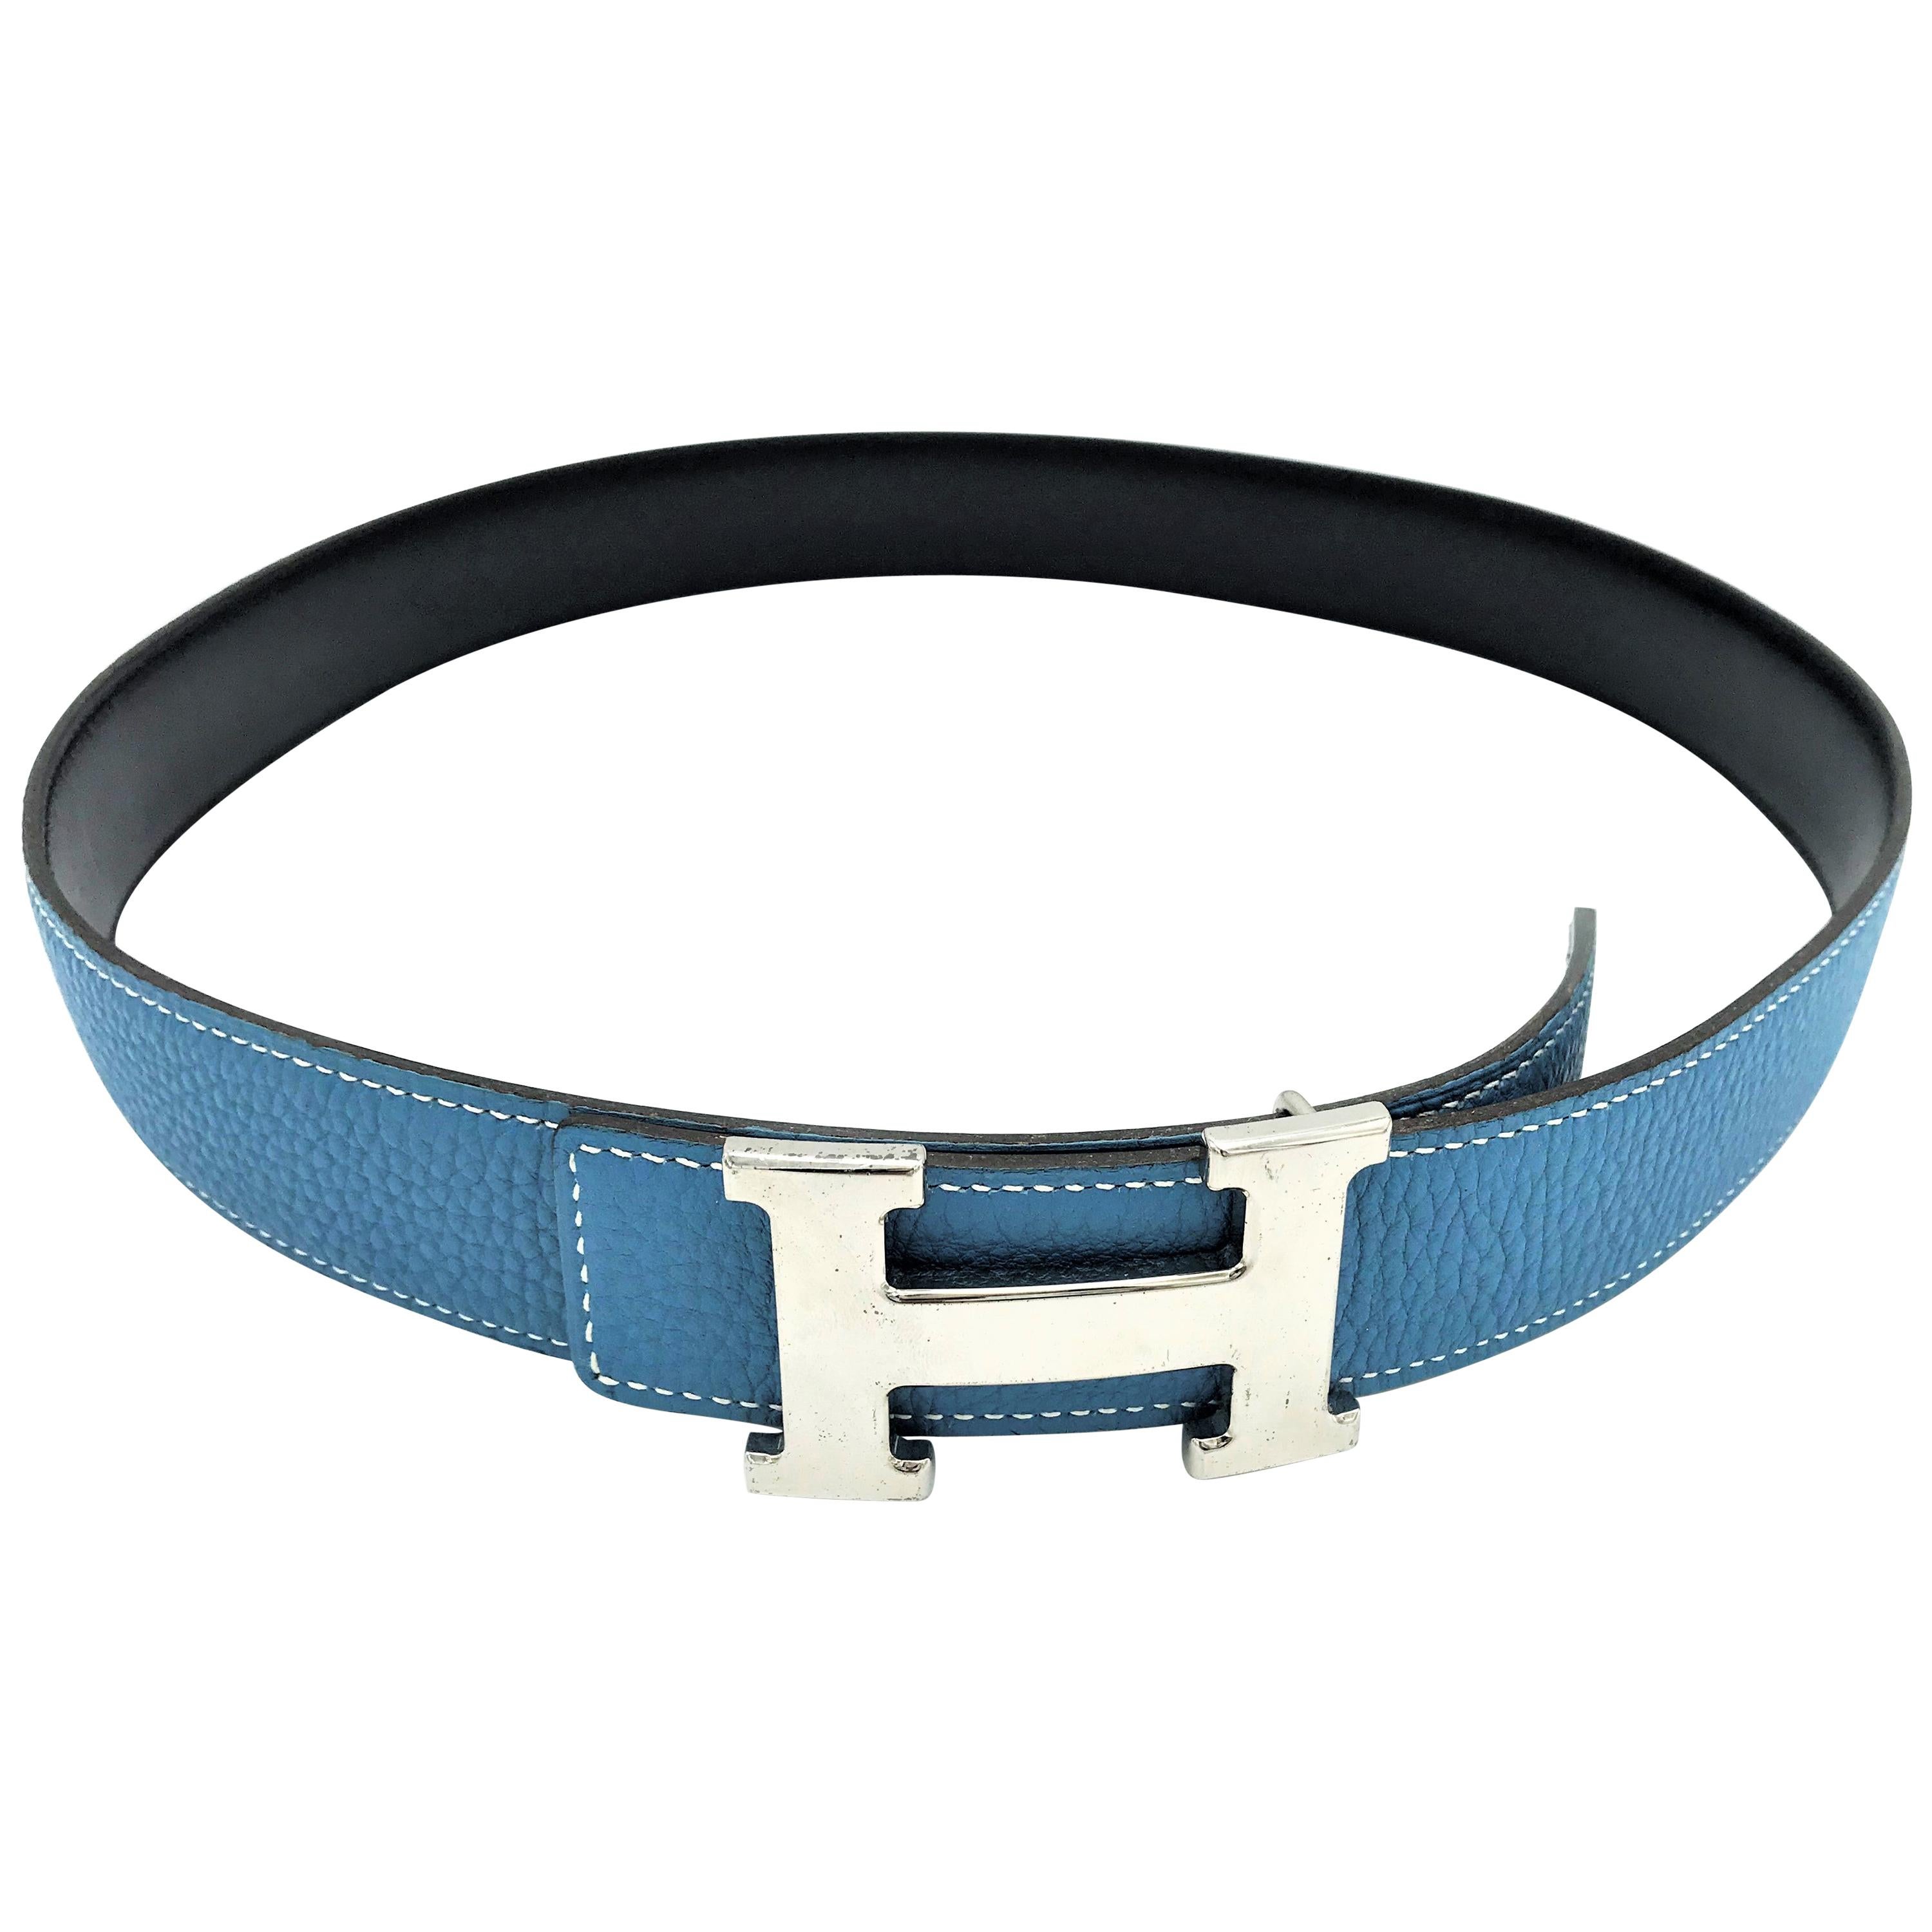 Hermes Constance reversible belt in blue jeans/black calfskin